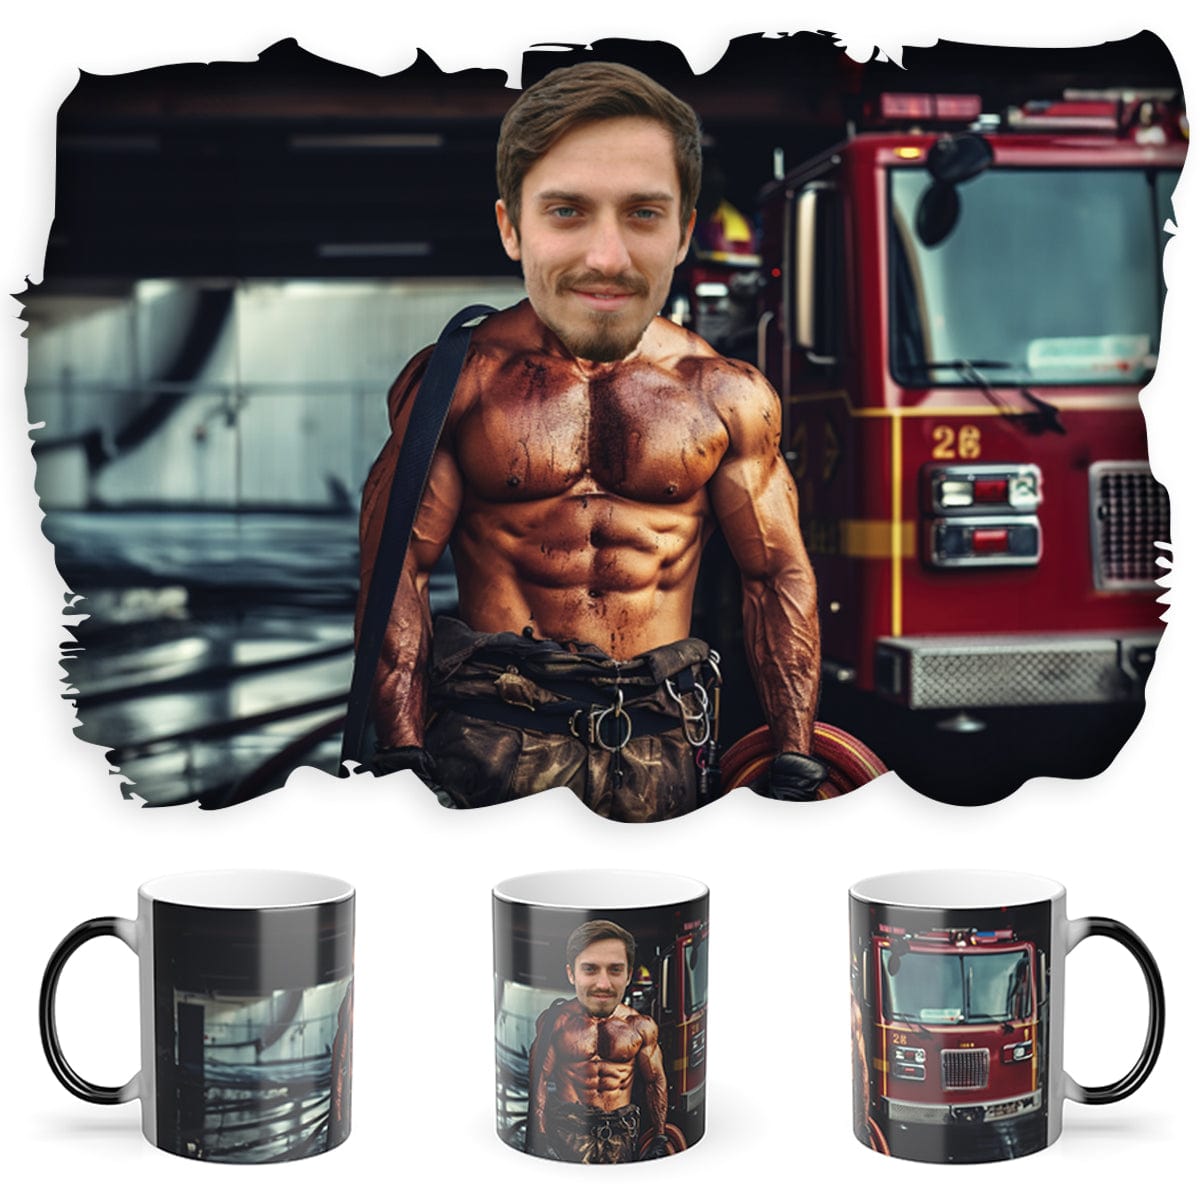 Heat Reveal Mug - Sexy Firefighter Face upload